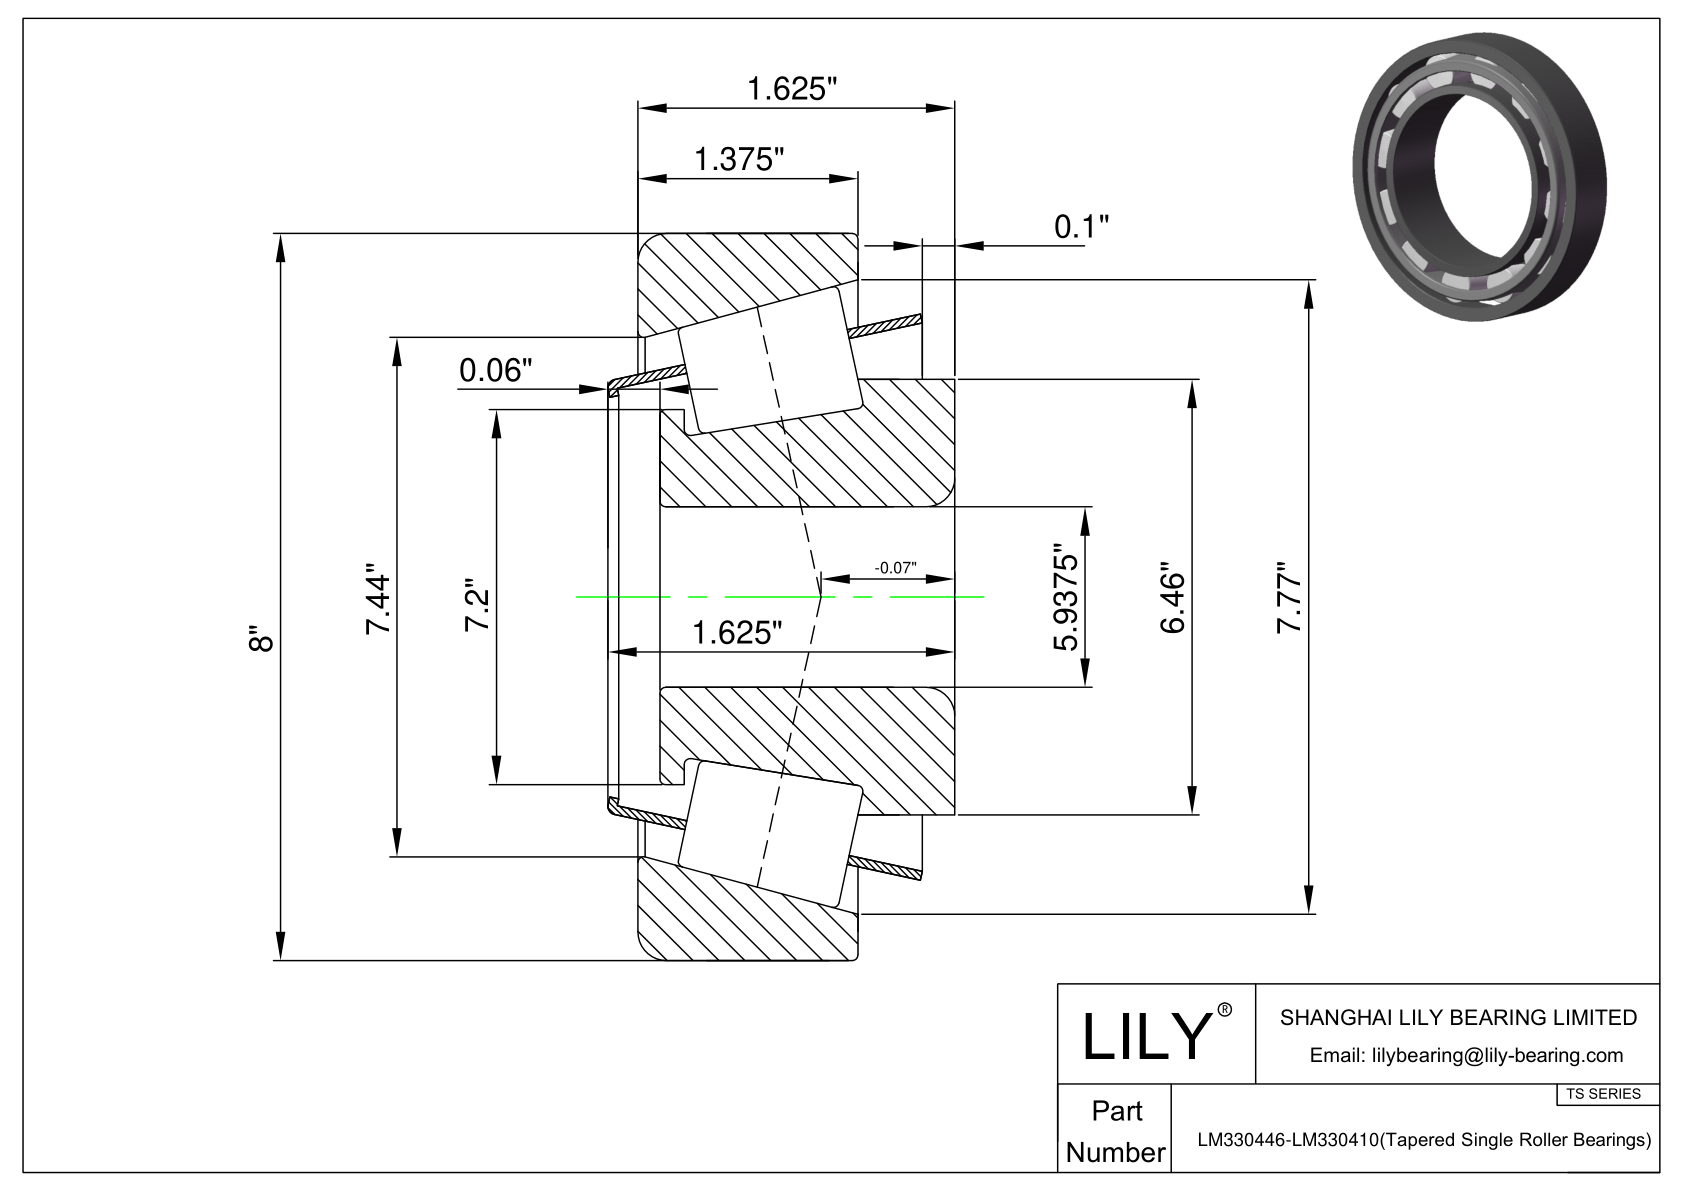 LM330446-LM330410 TS系列(圆锥单滚子轴承)(英制) CAD图形